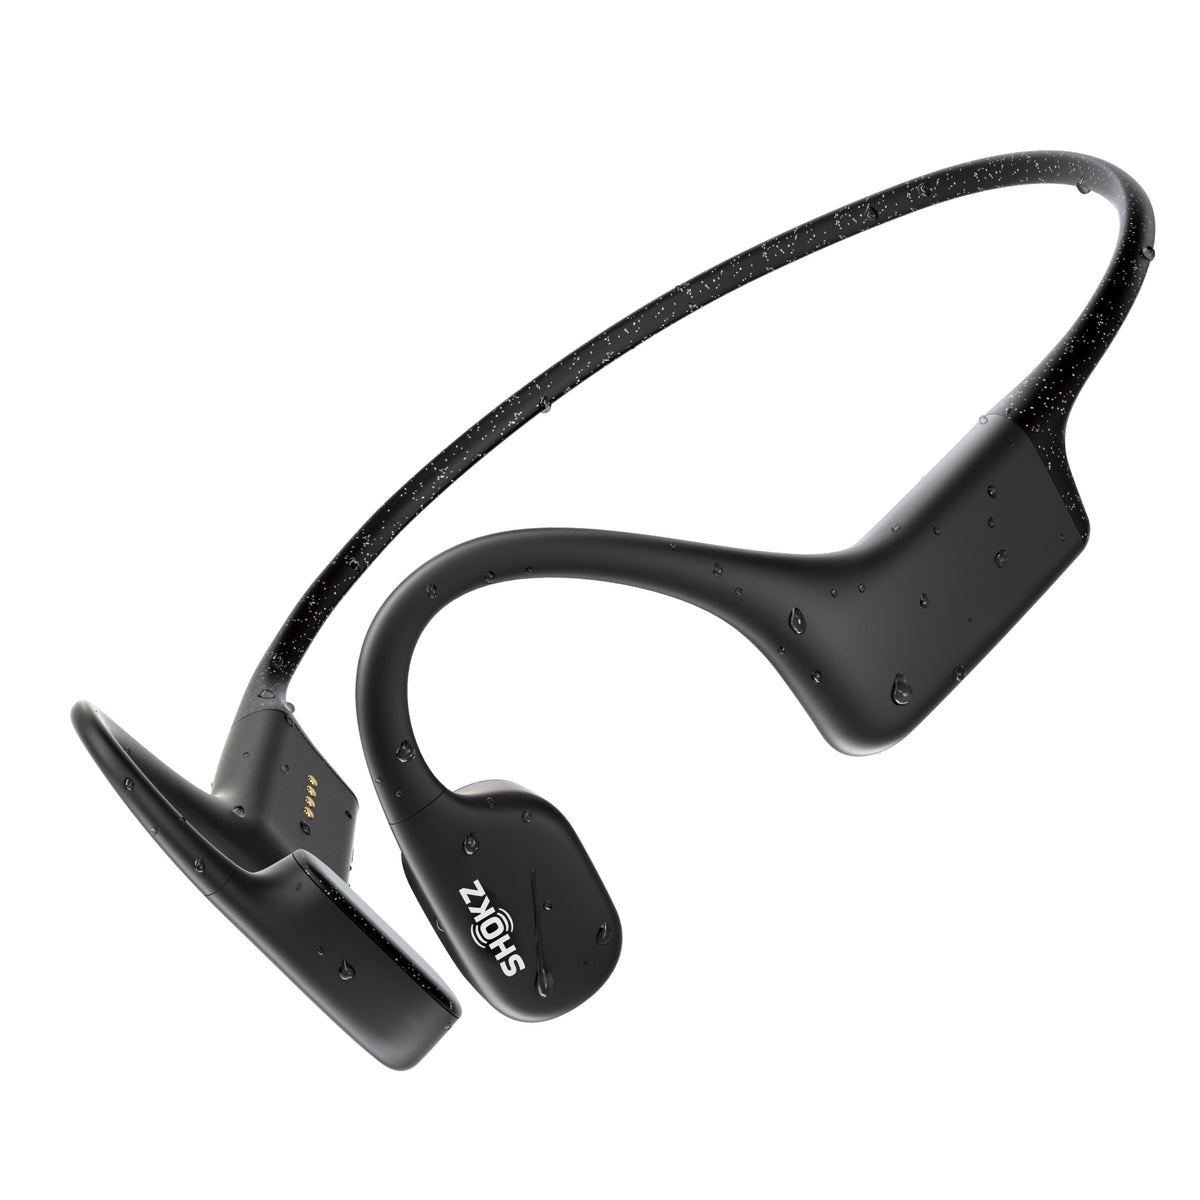 Shokz OpenSwim Bone Conduction Wireless Headphones IP68 Waterproof – Shokz  AU